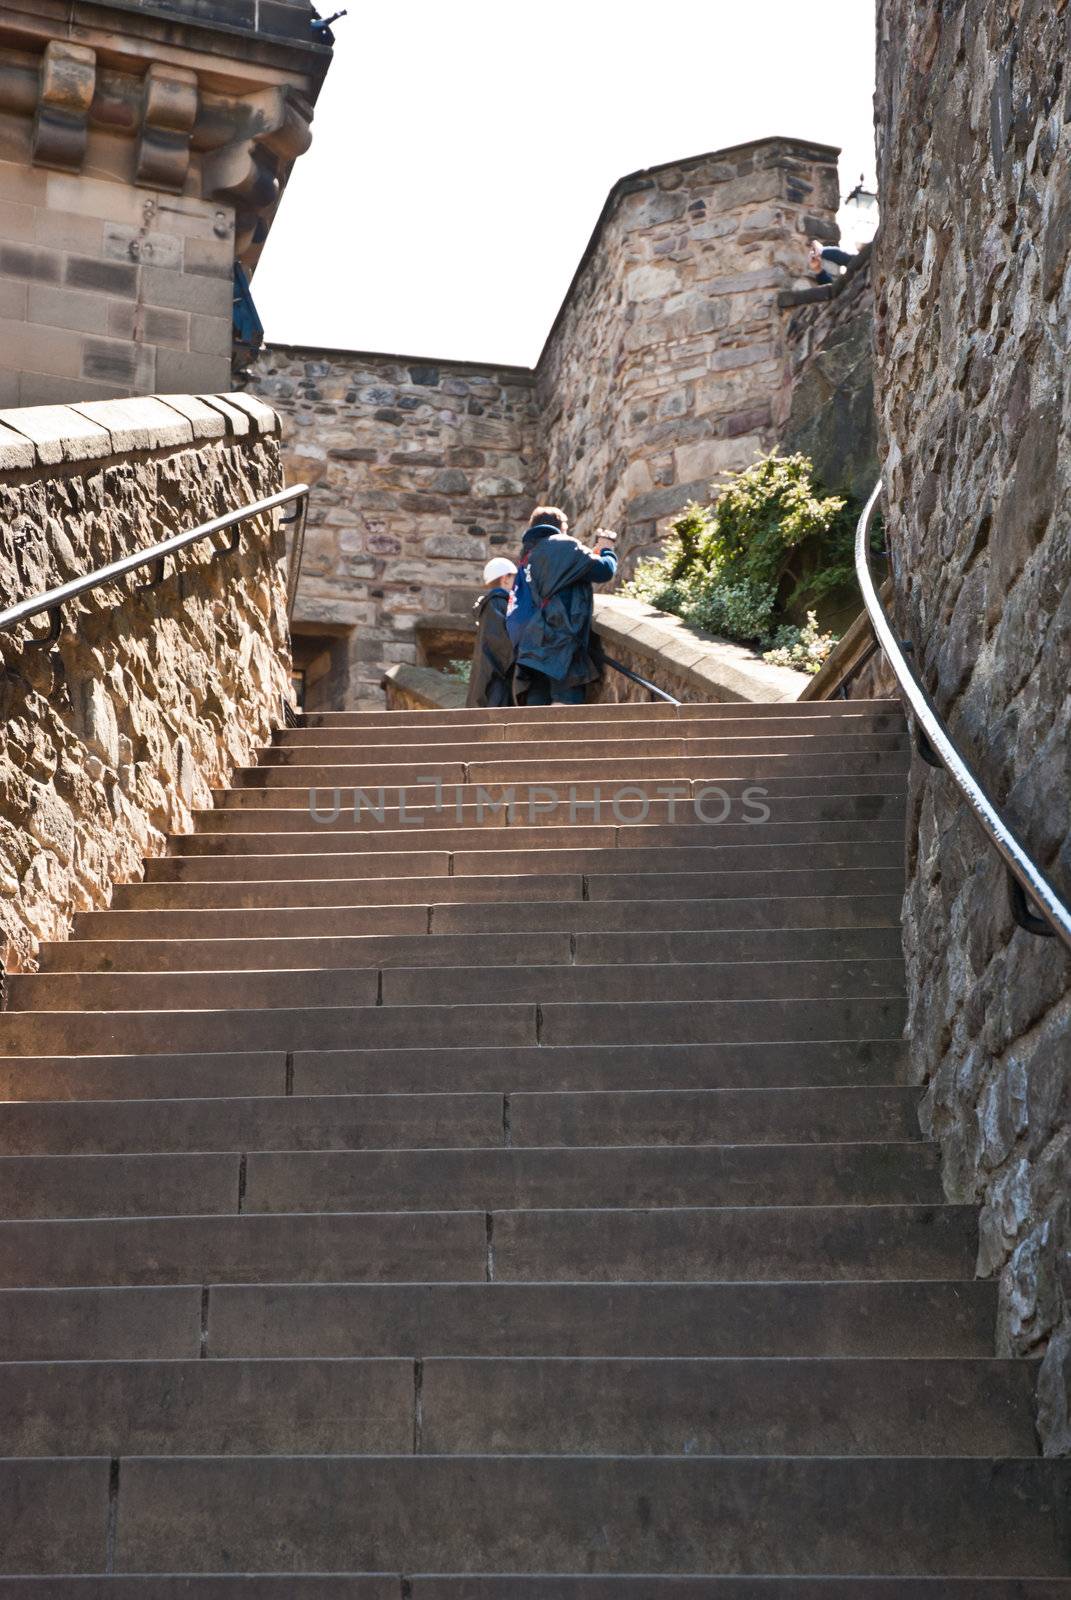 Edimburgh Castle, flight of steps by fabriziopiria